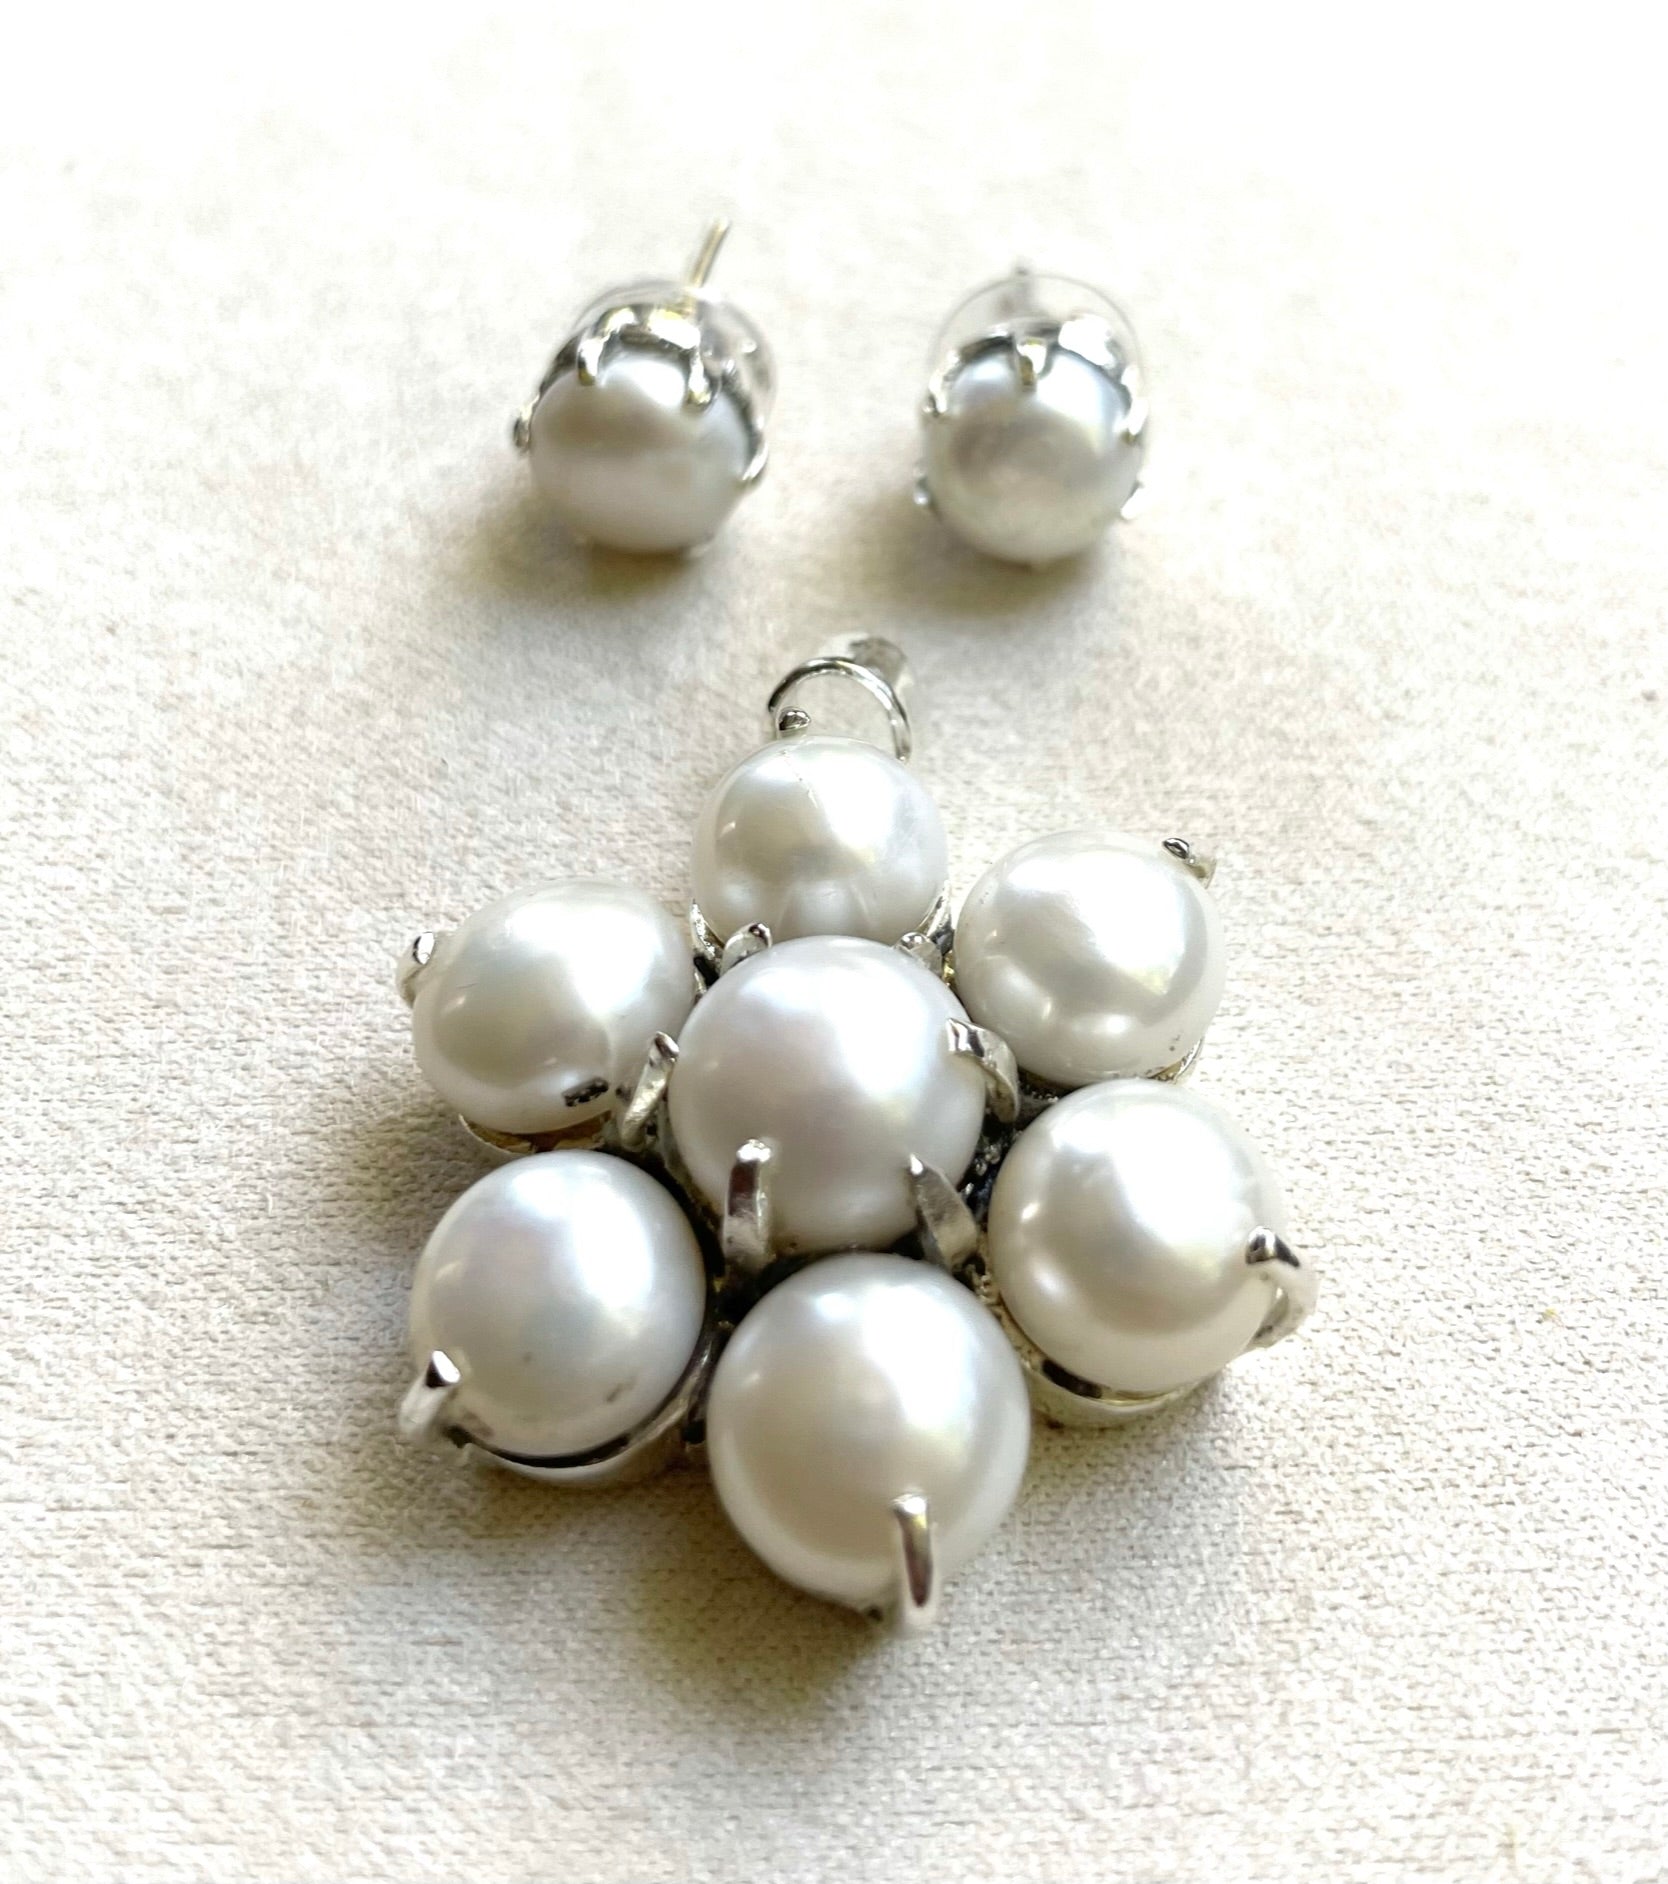 Pearl flower pendant and earrings